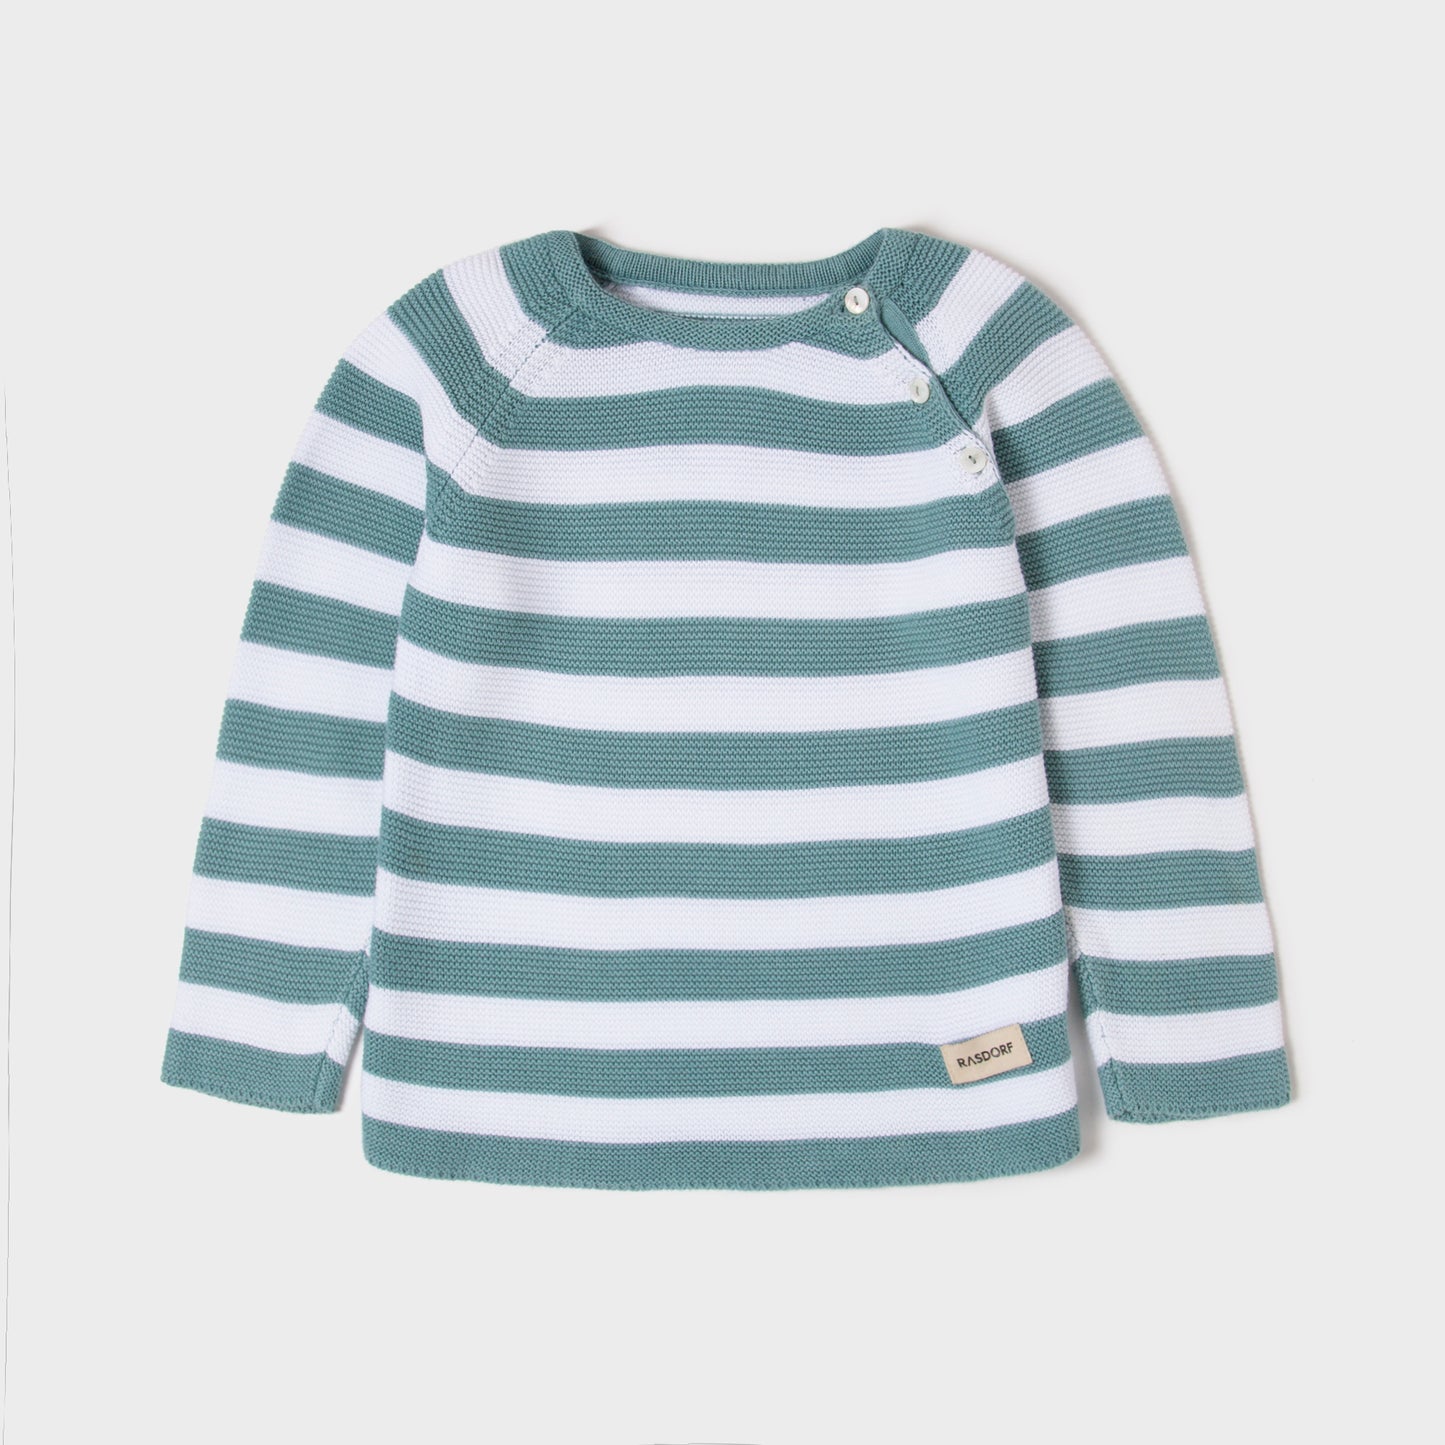 Aqua Green and White Sailor Striped Sweater